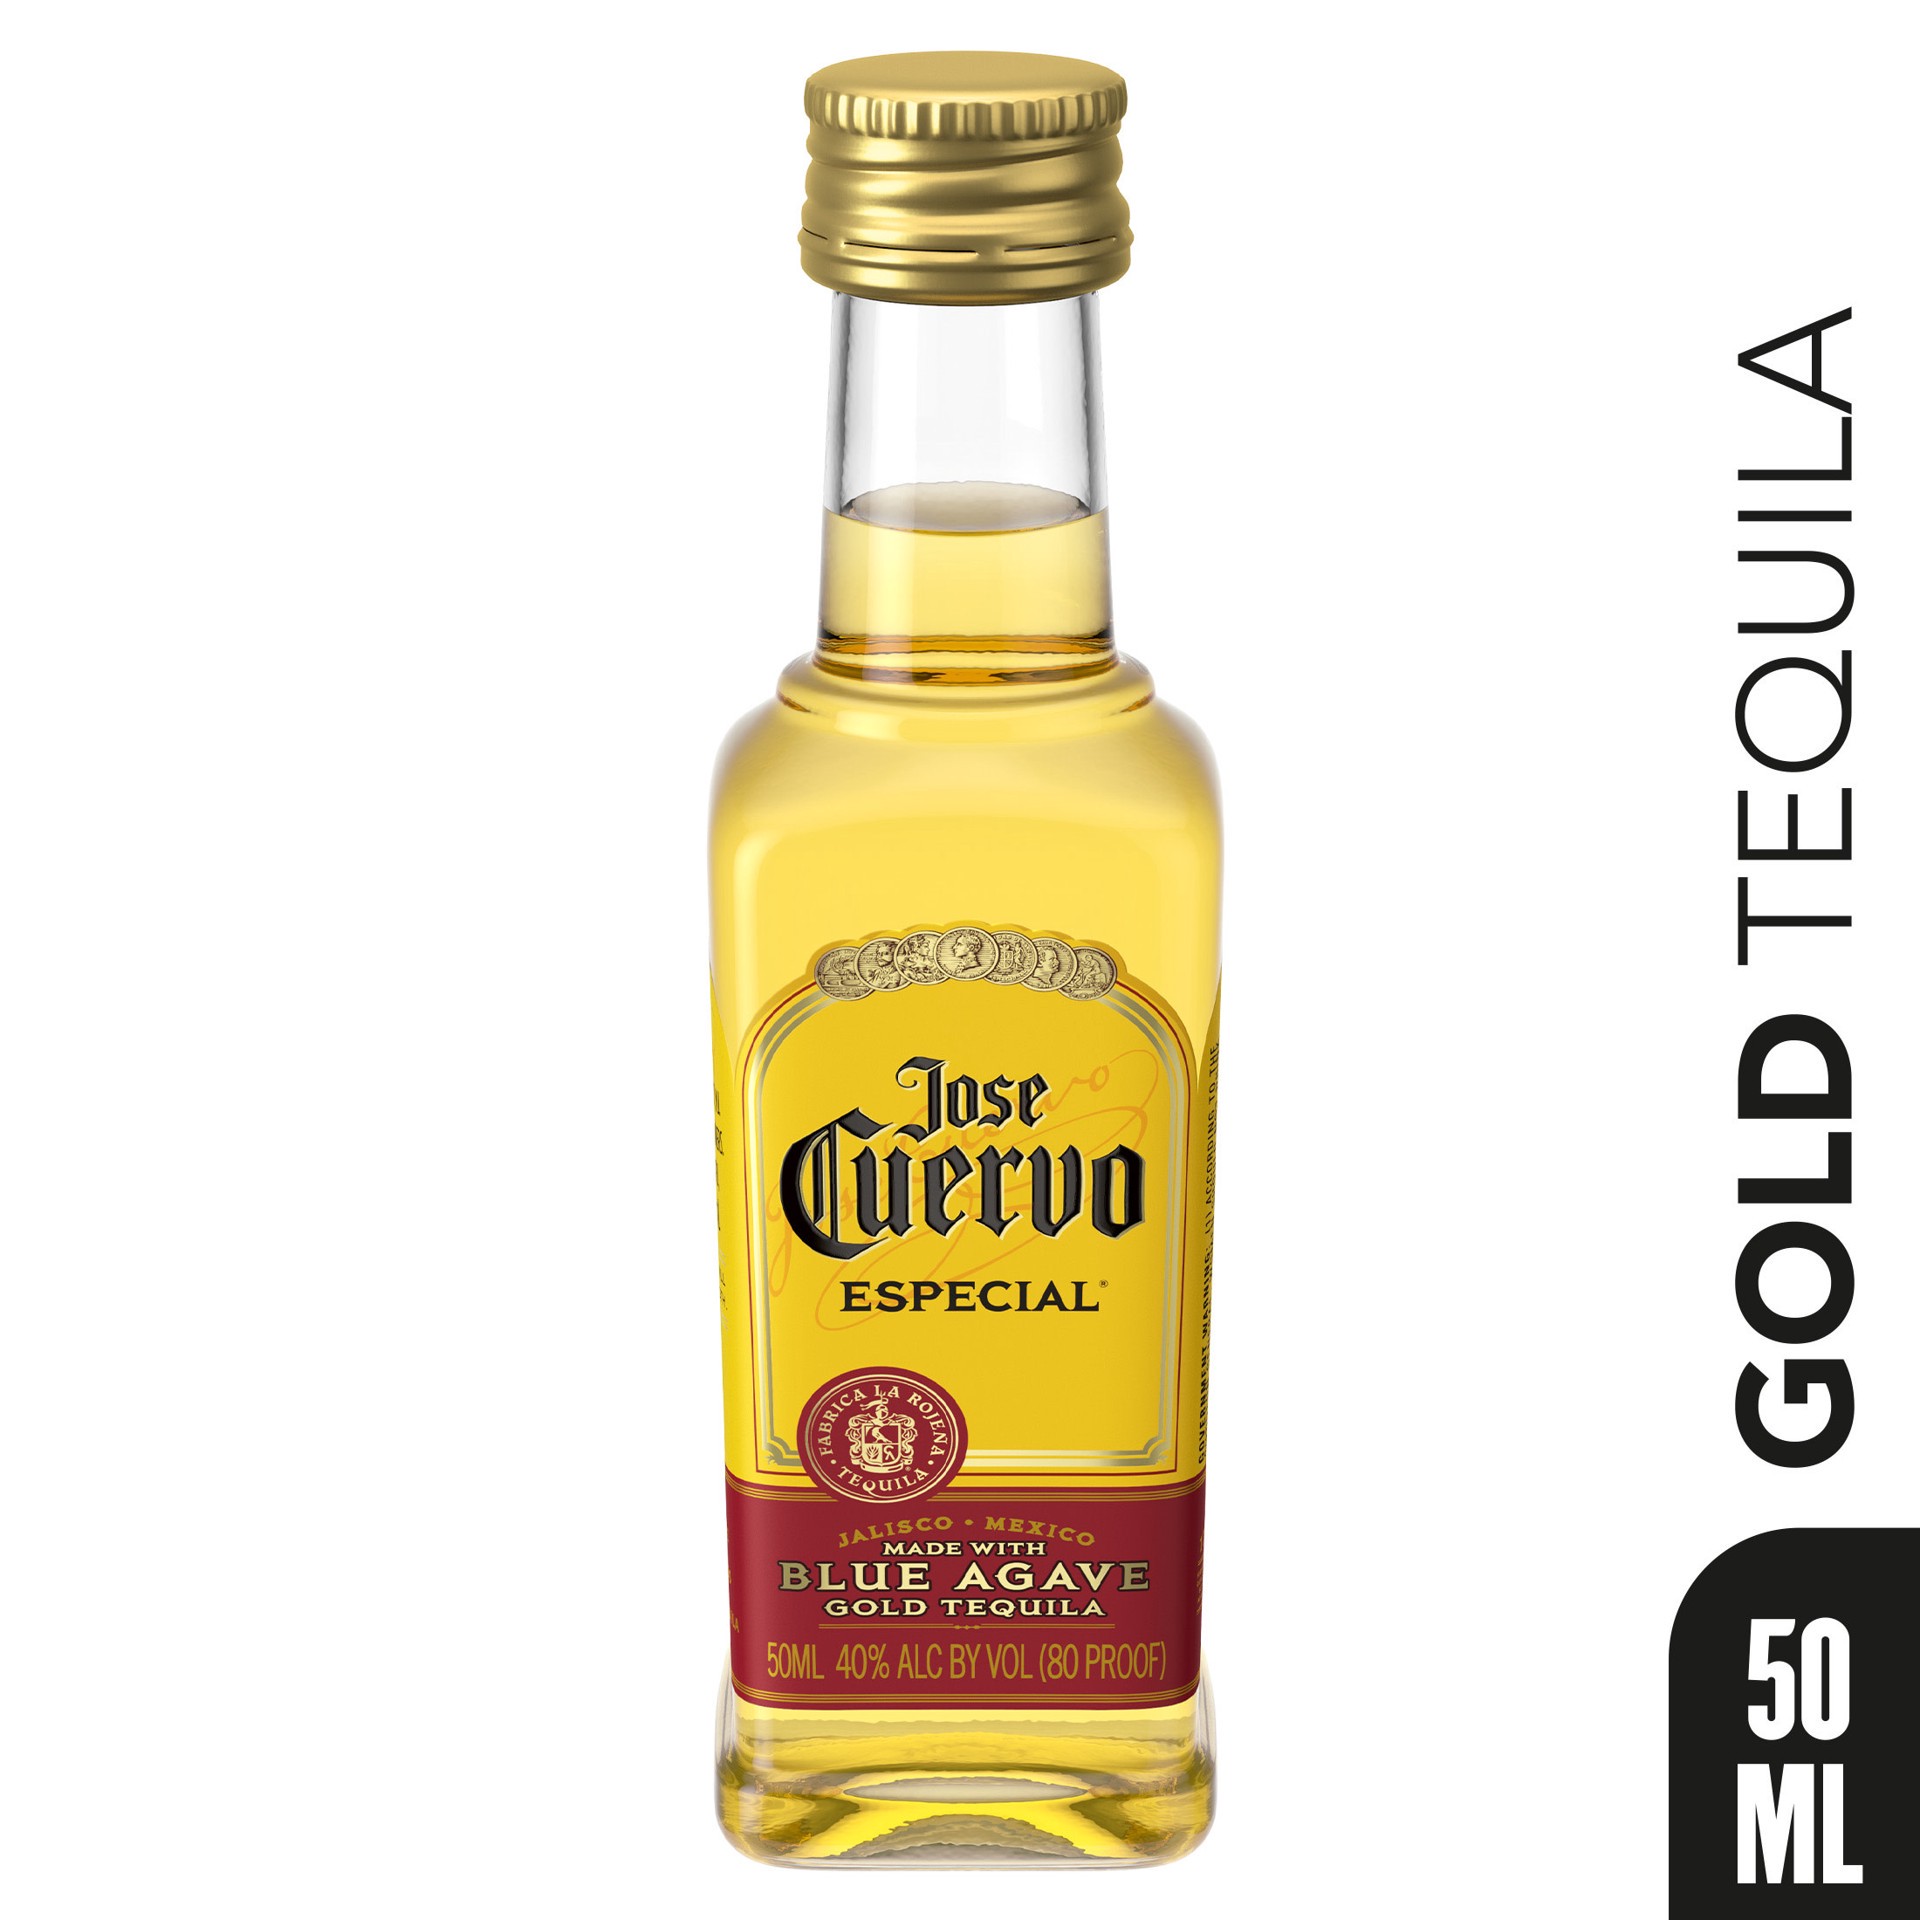 slide 6 of 7, Jose Cuervo Tequila 50 ml, 50 ml